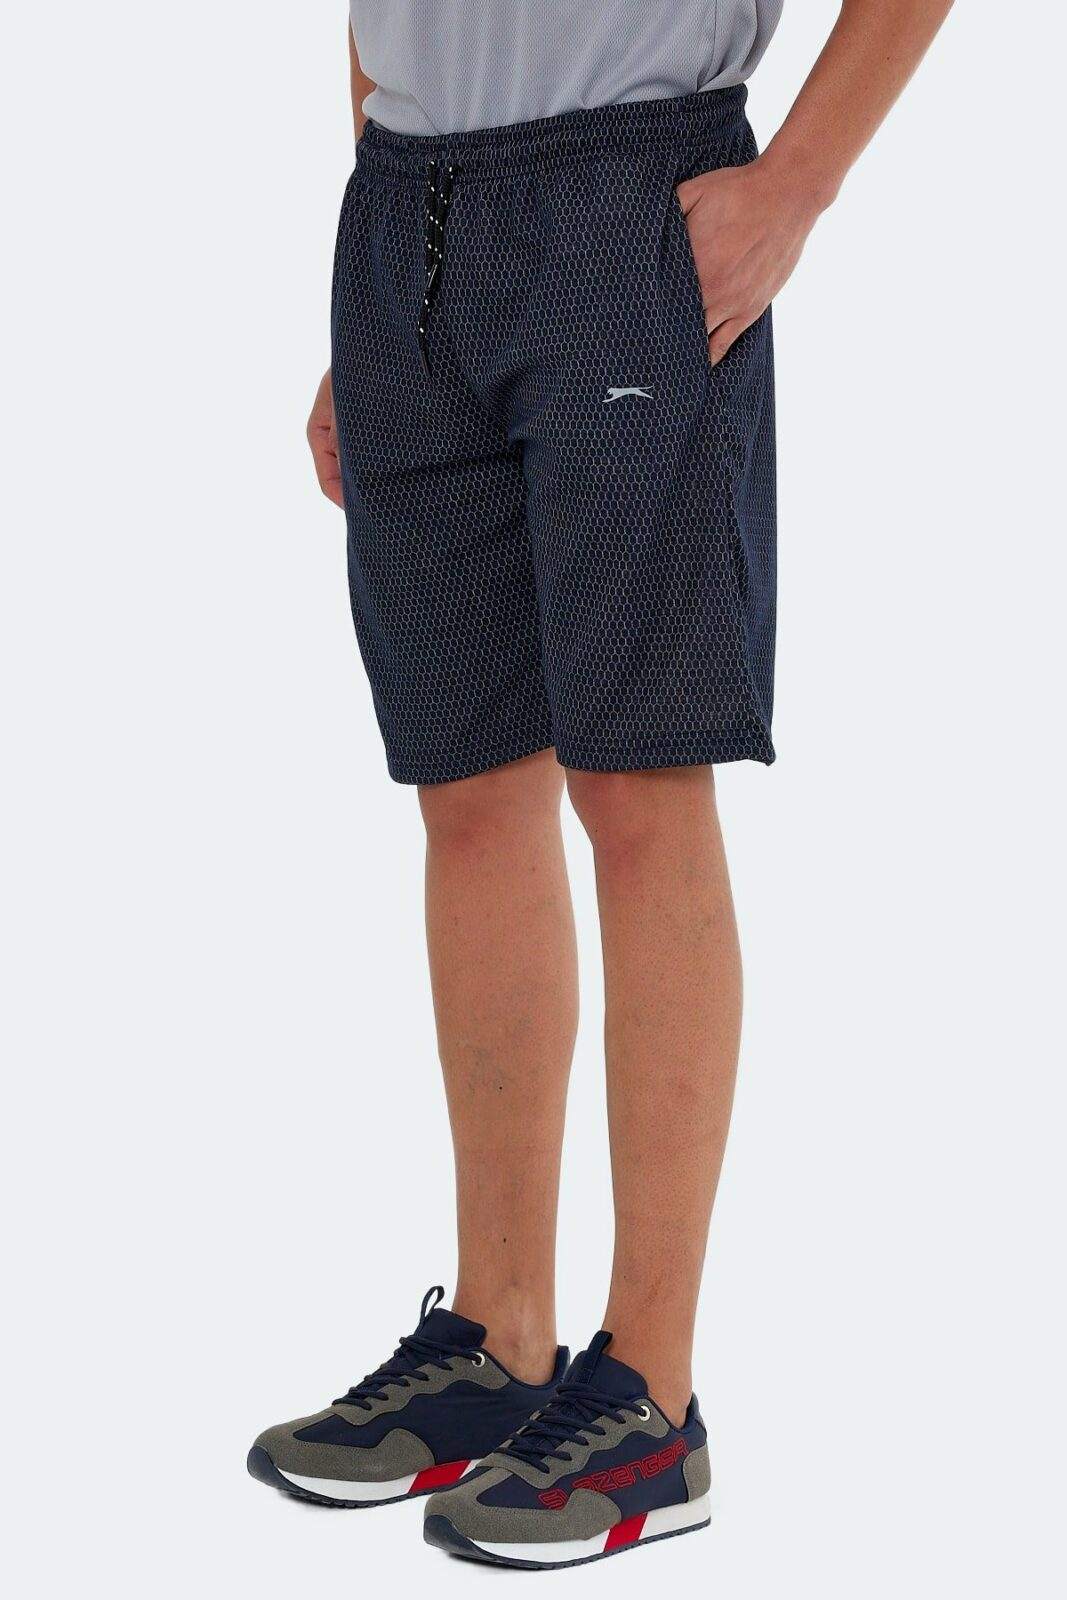 Slazenger Shorts - Navy blue